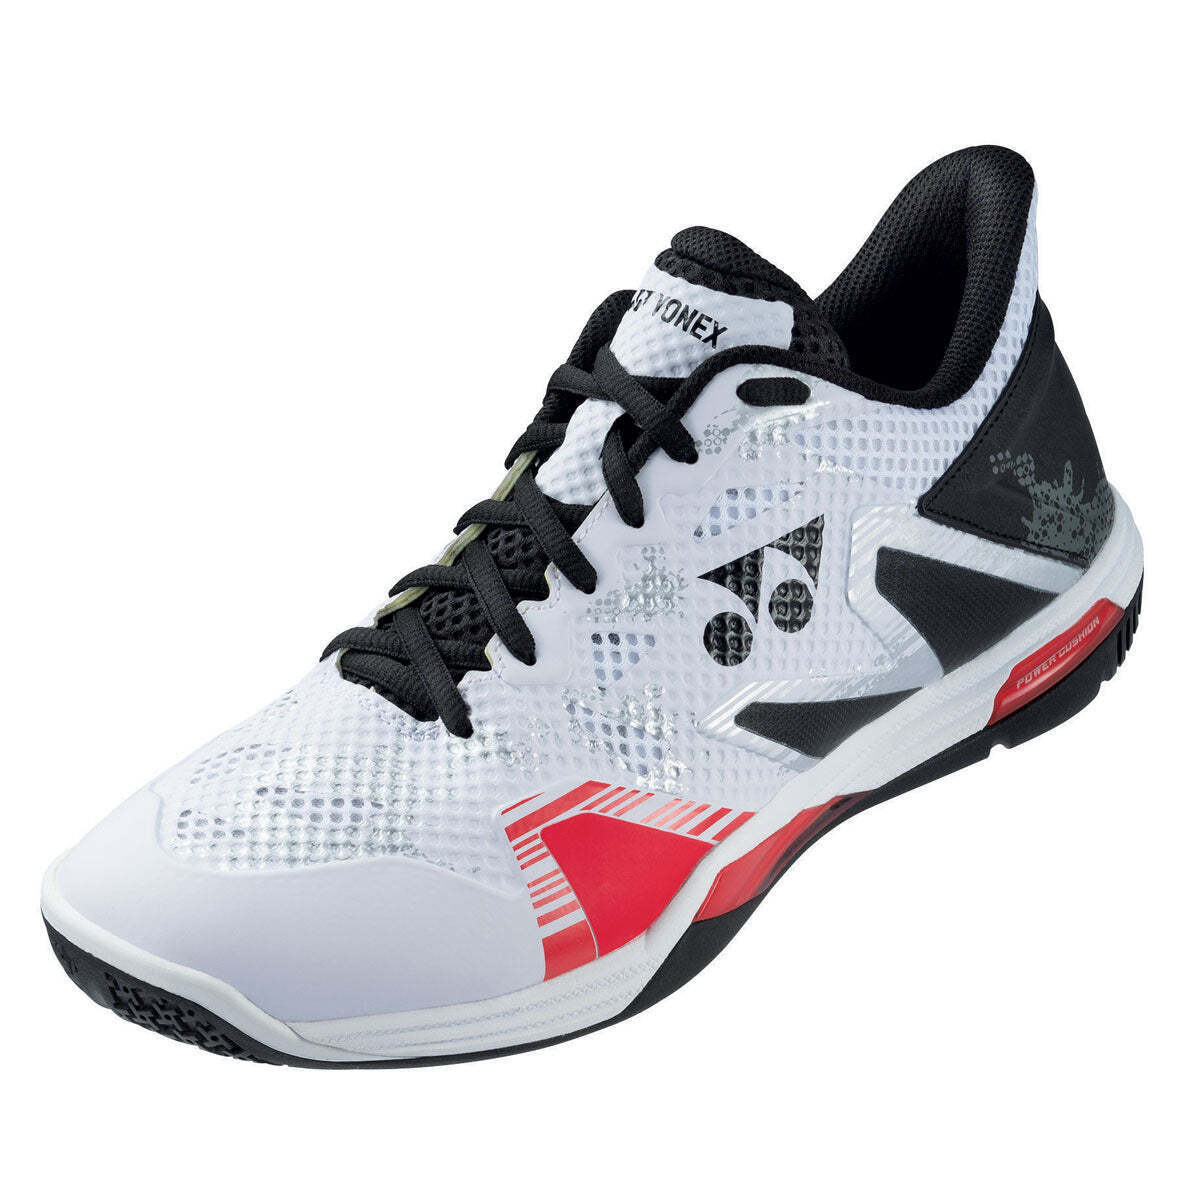 Yonex Eclipsion  Z3 Badminton Shoes